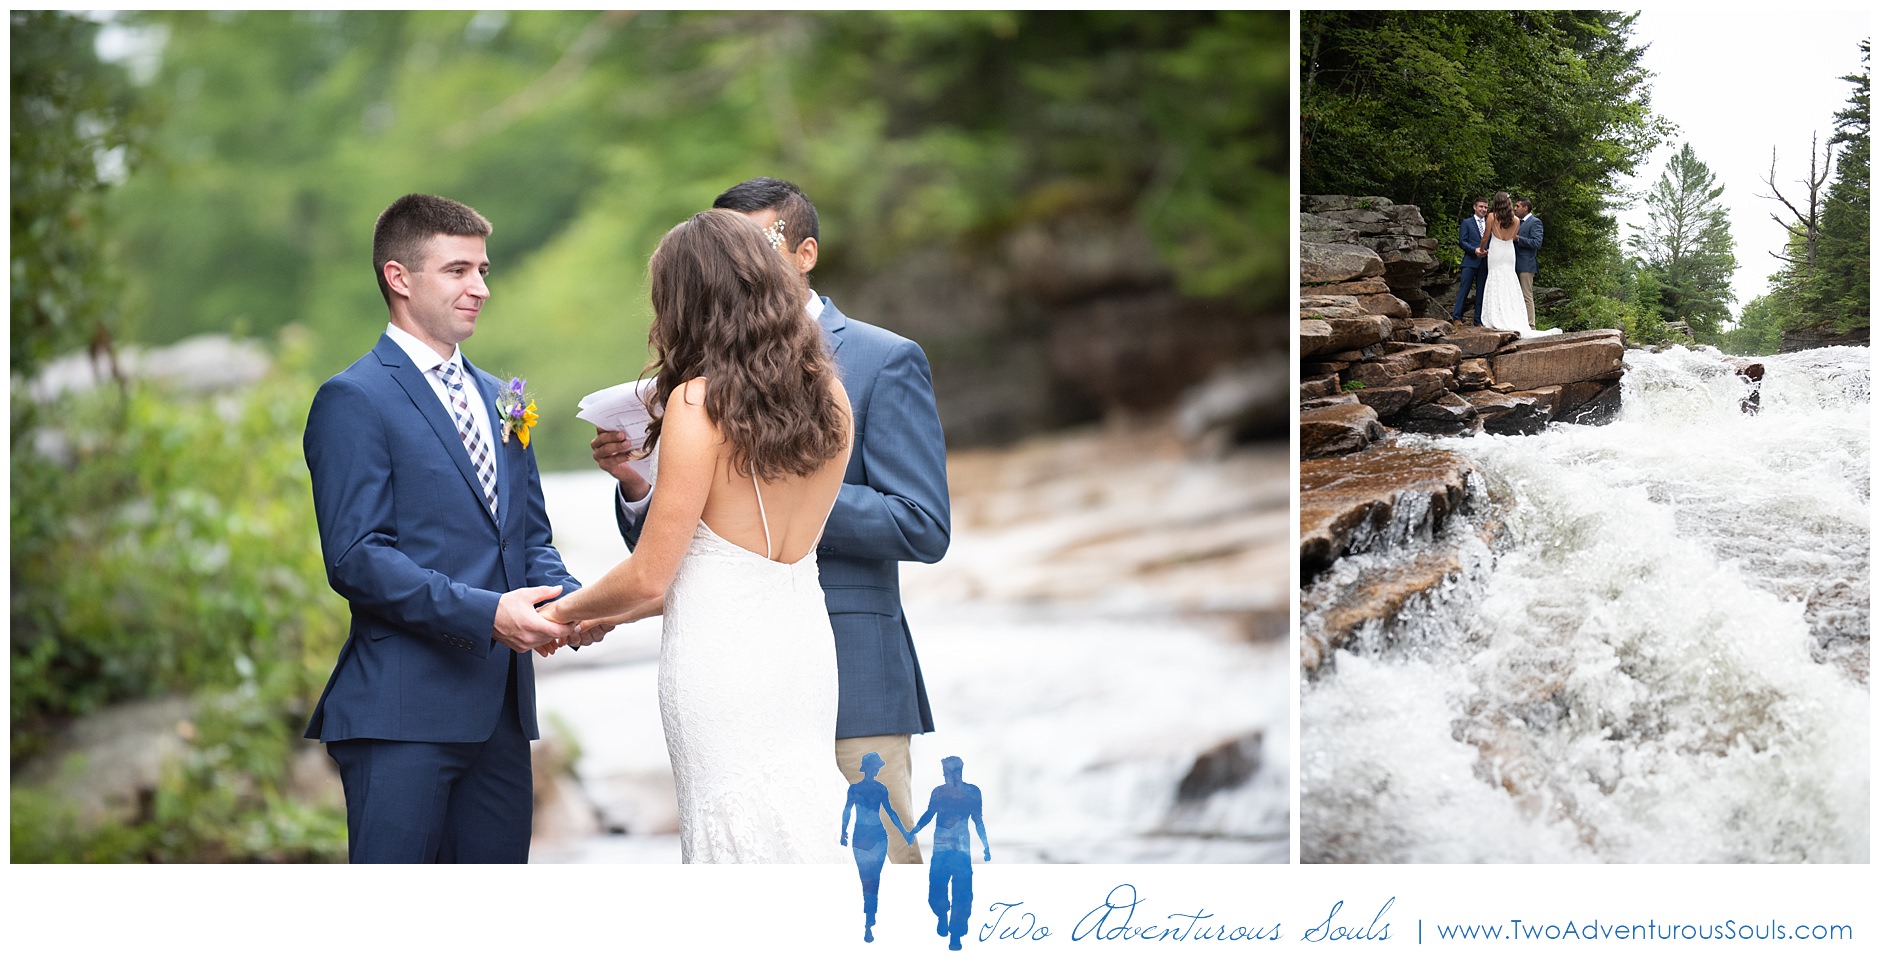 081818 - Chana & Rich - wedding SNEAKS-54_Adventure Wedding, Destination Wedding Photographers.jpg